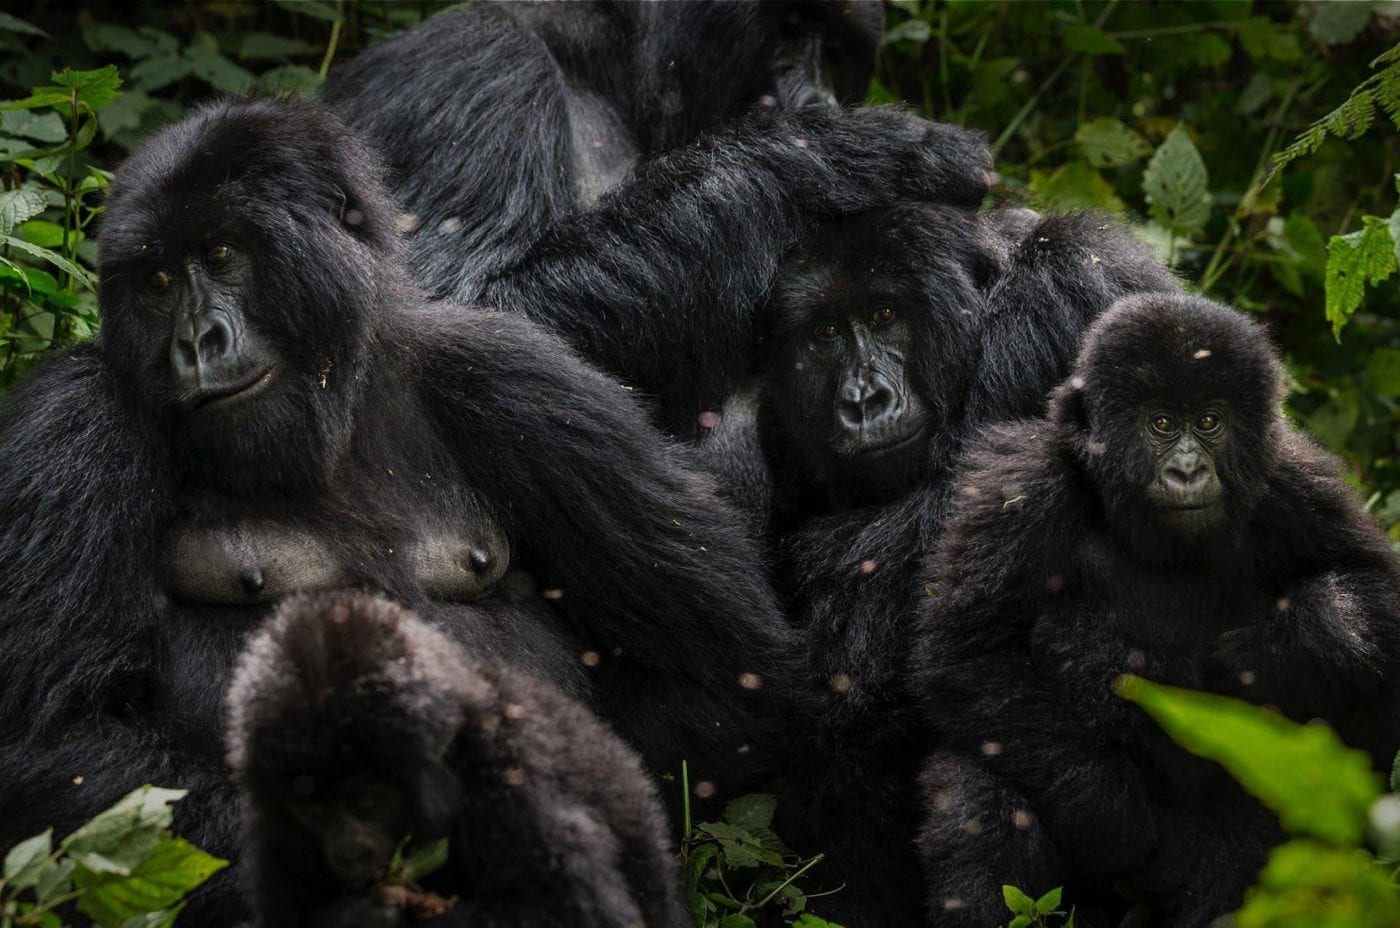 image of an endangered mountain gorilla family